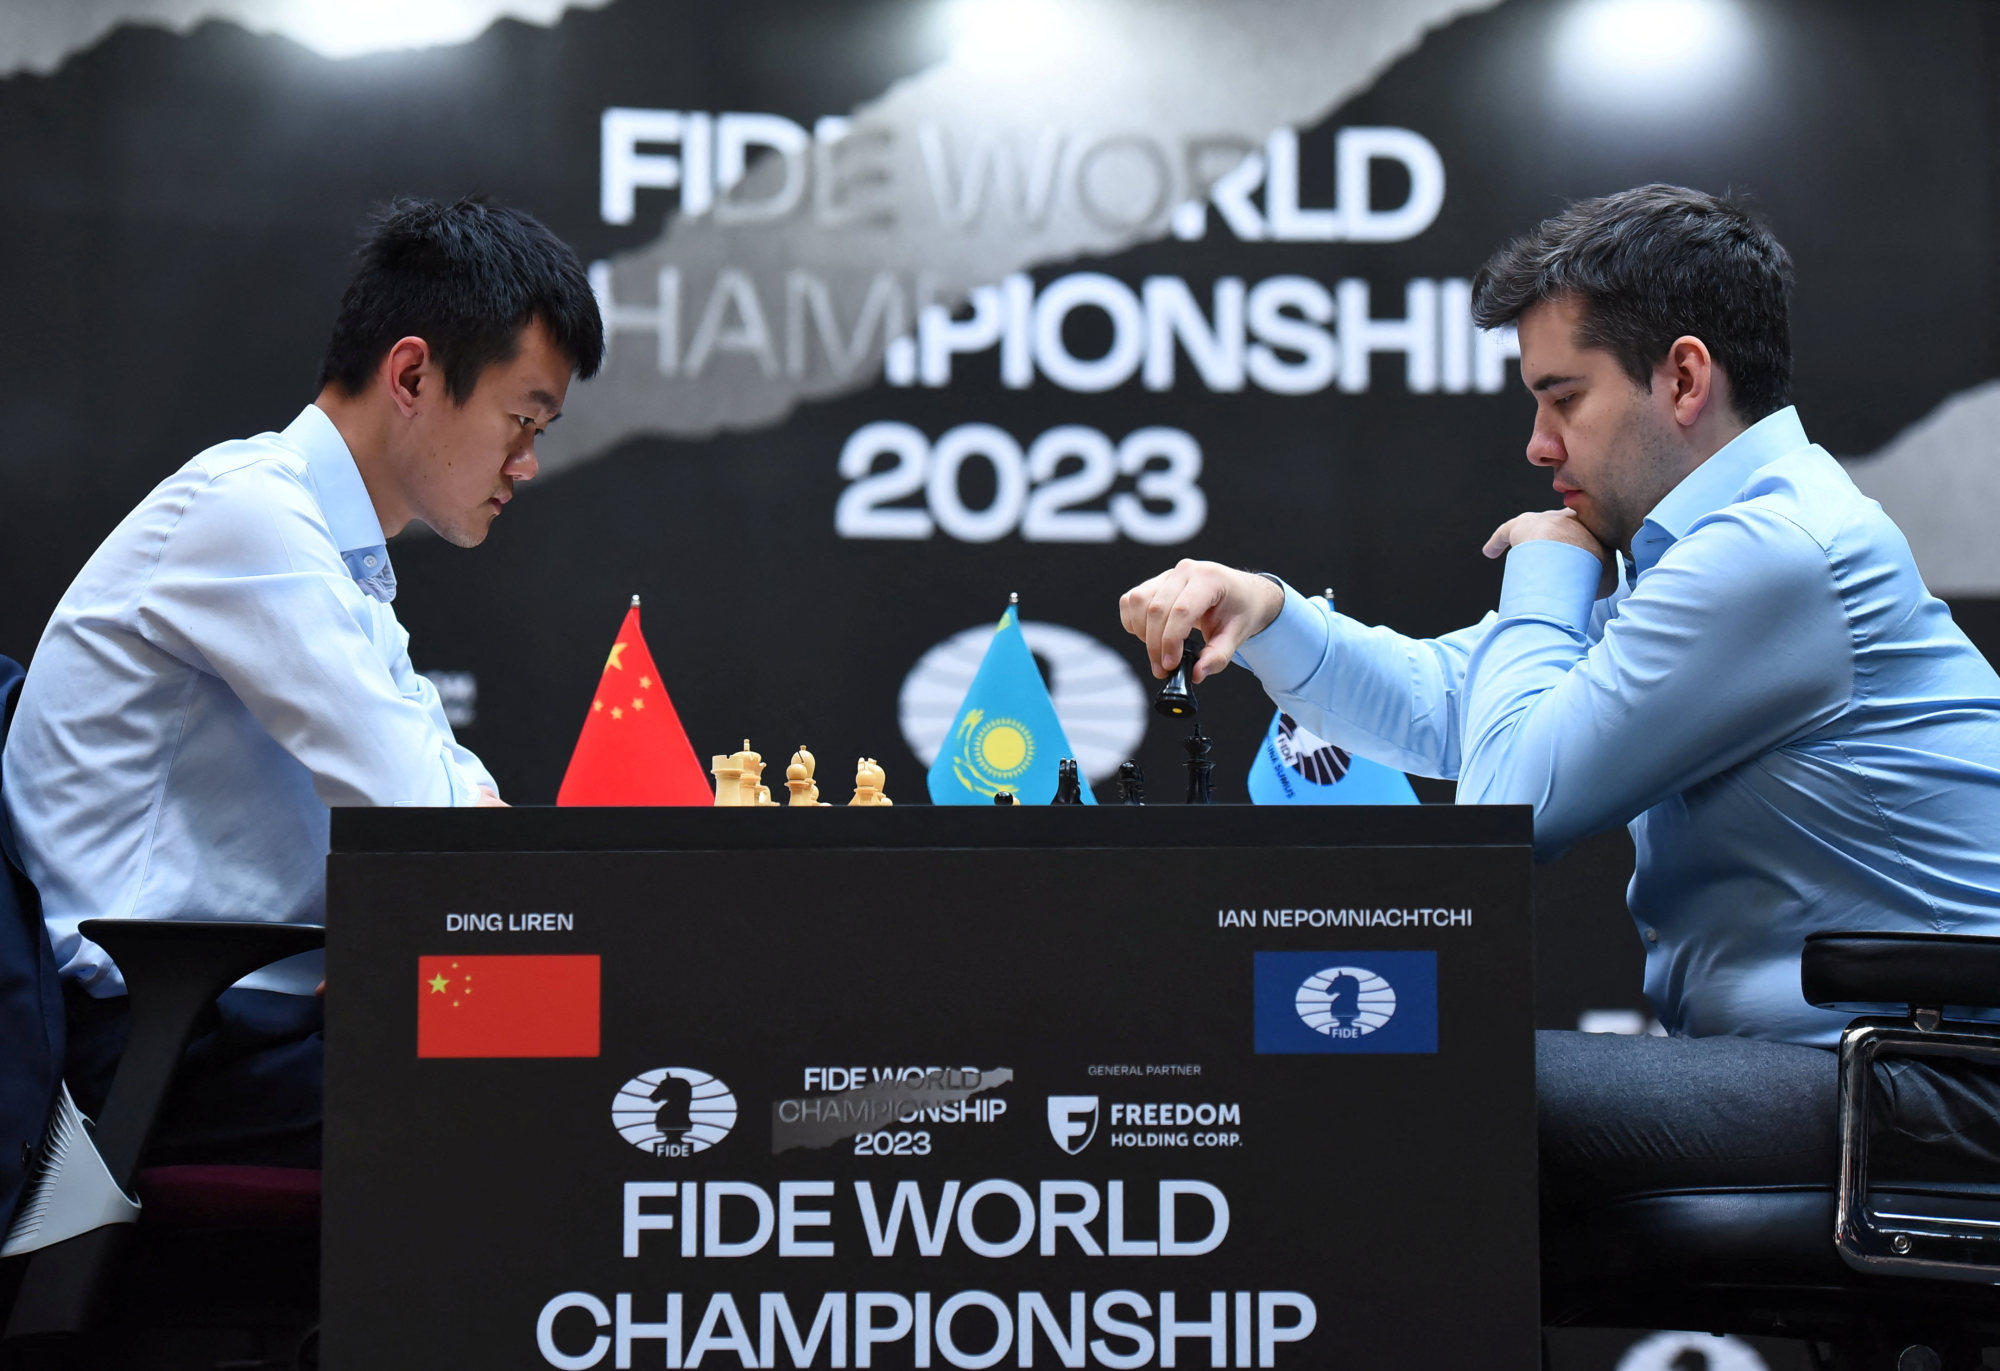 World Chess Championship: Ding Liren becomes first Chinese winner